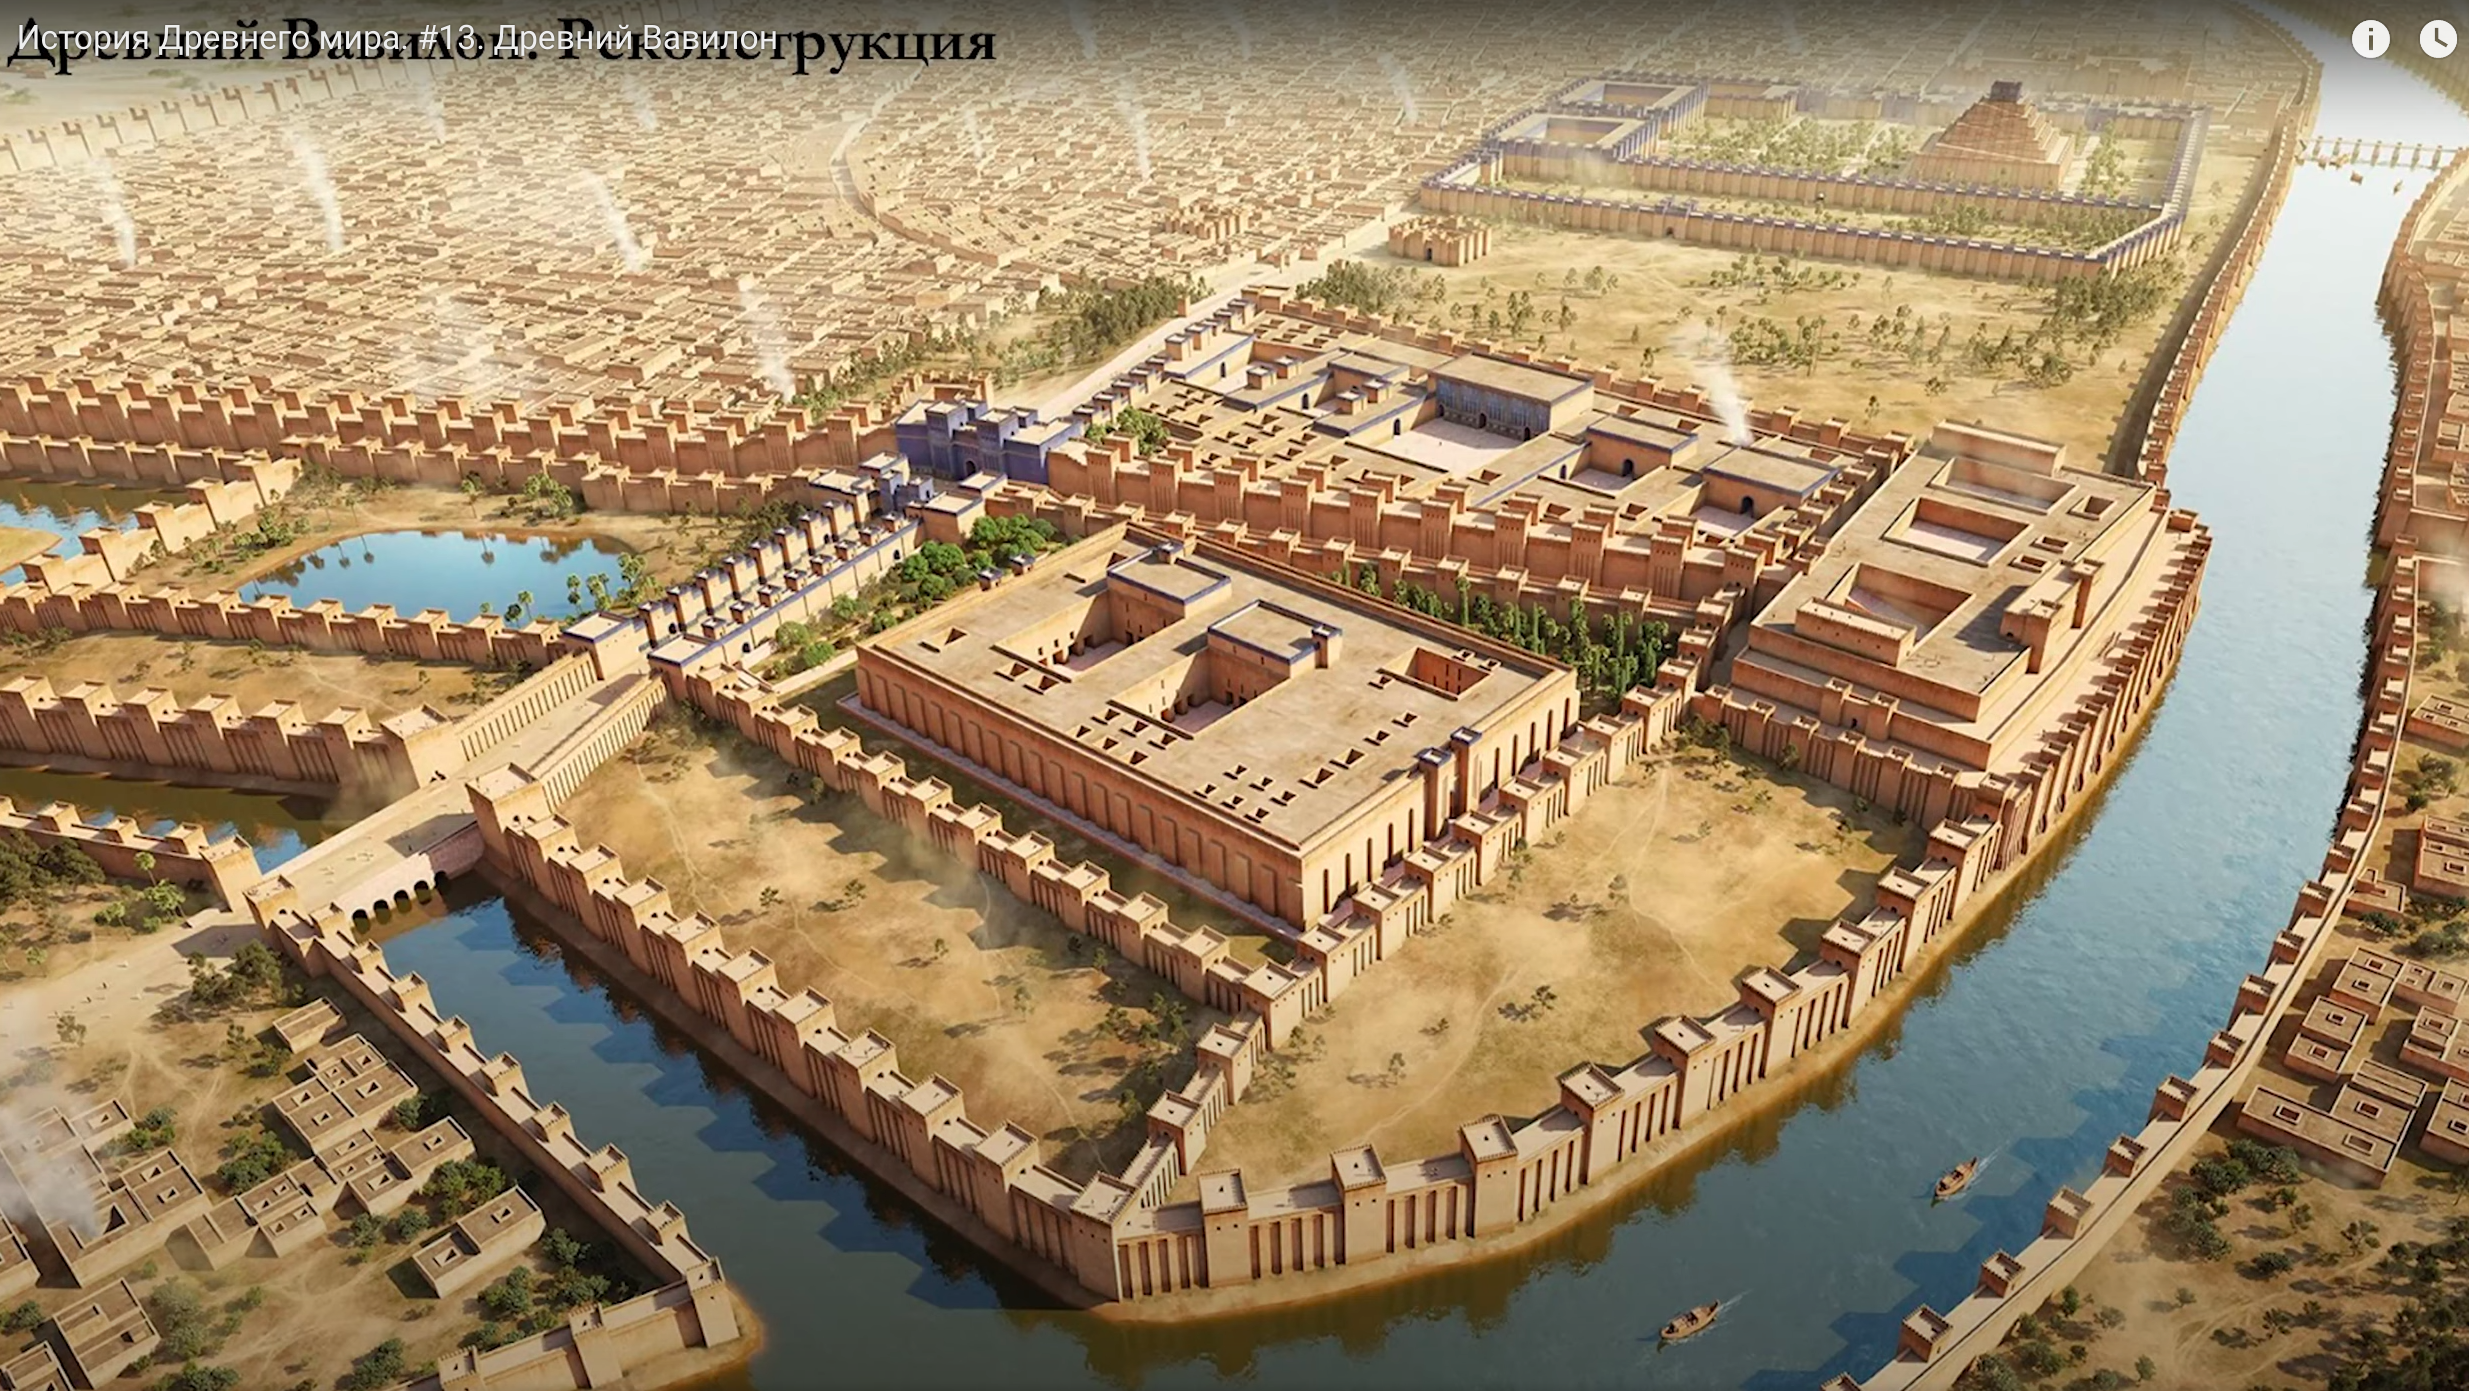 Вавилон страна в древности. Месопотамия Вавилон. Вавилон древний город. Двуречье Вавилон. Междуречье Вавилон Месопотамия.